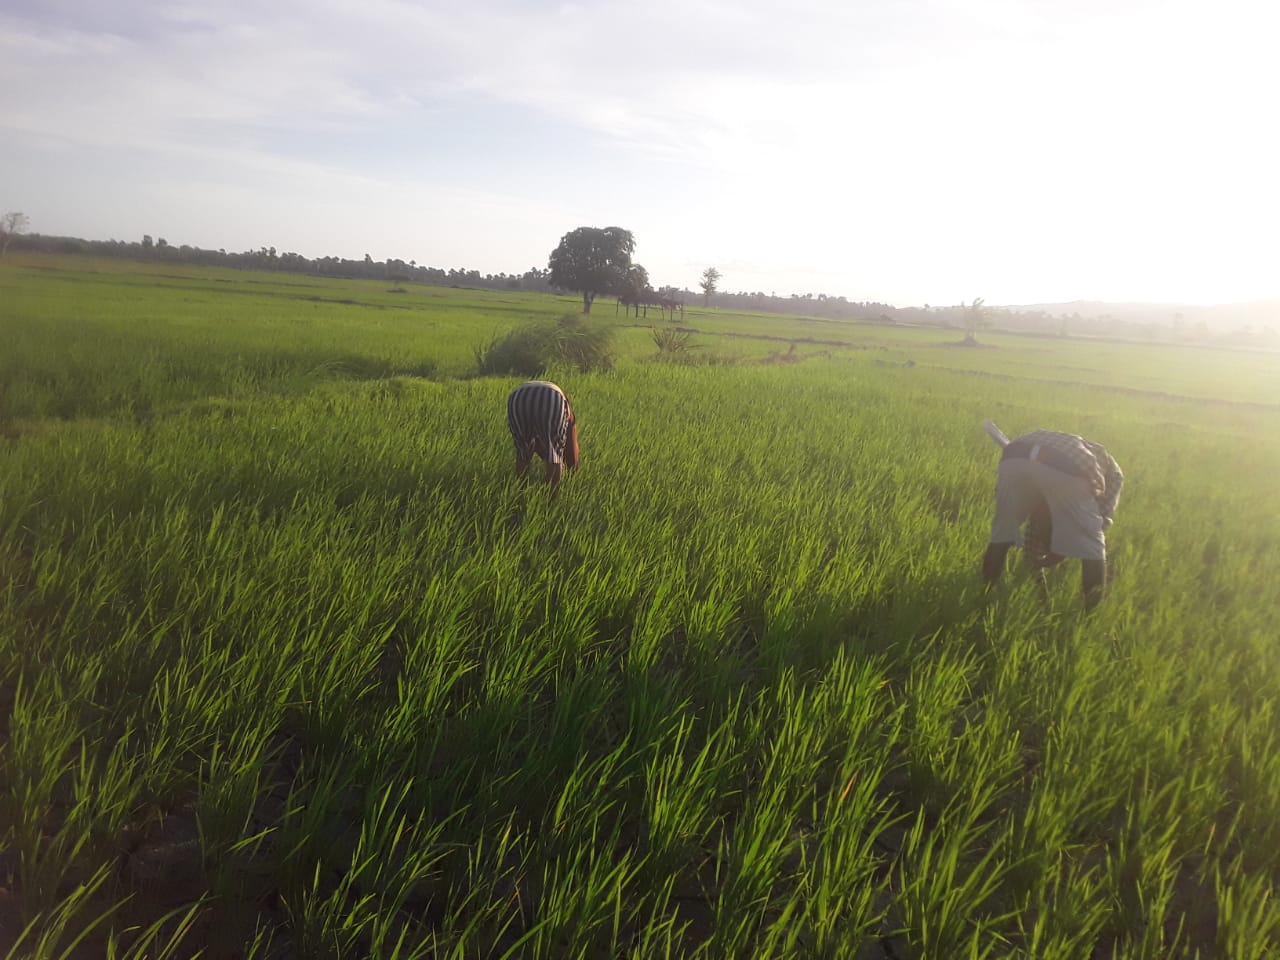 Indonesian farmers on a field